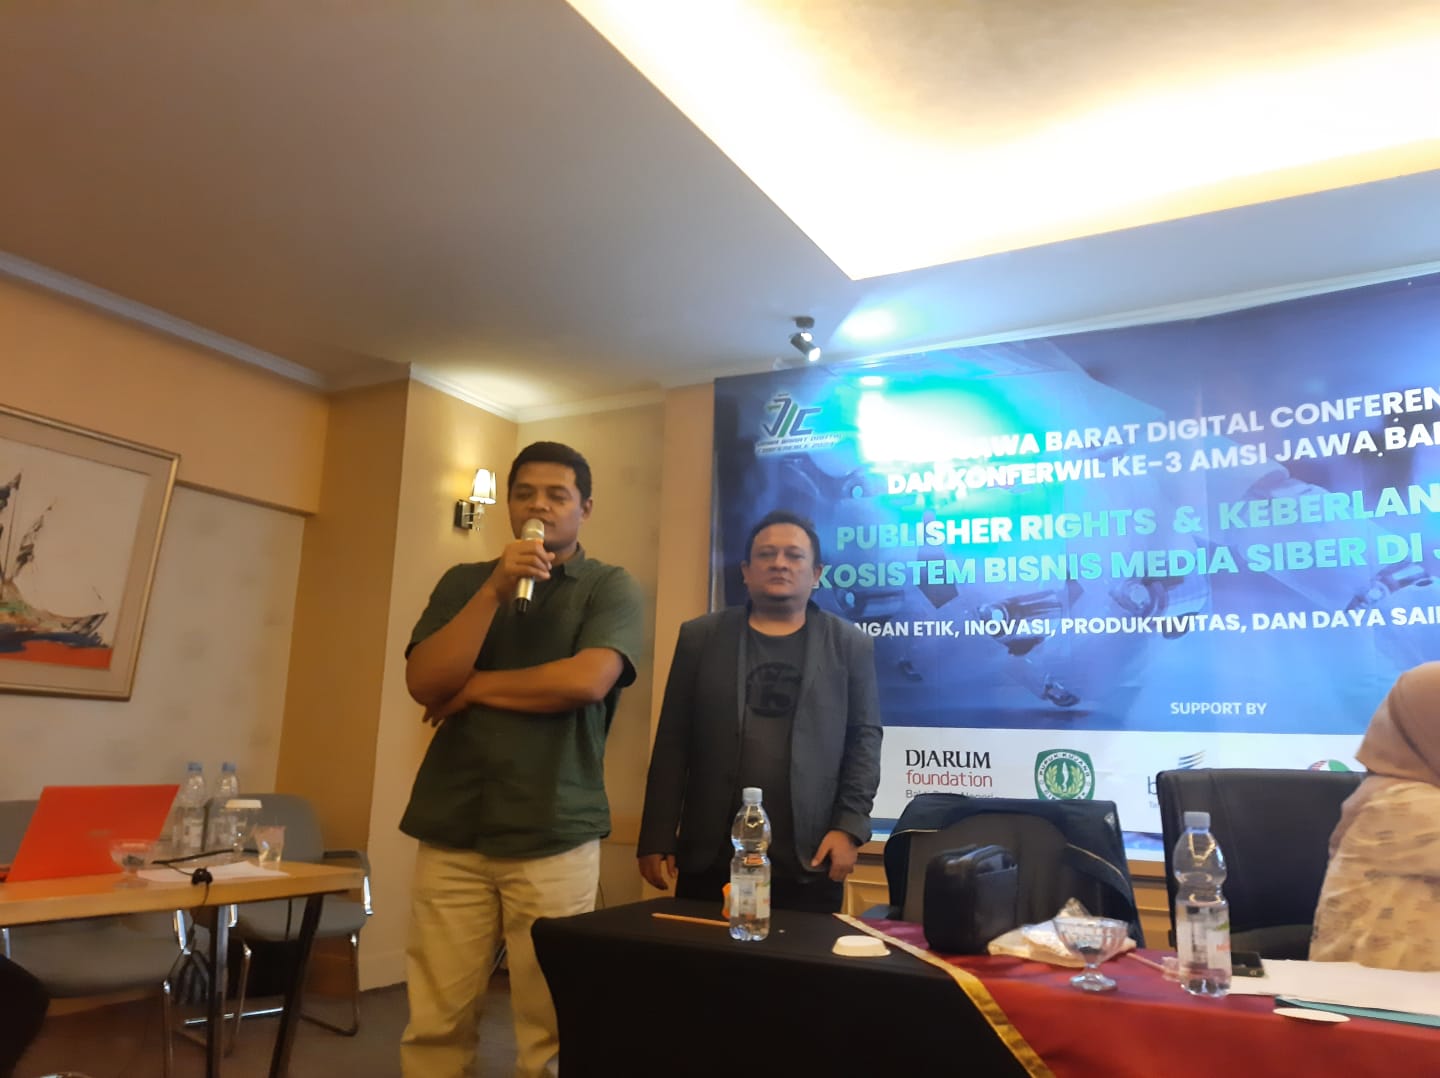 Pasangan pimpinan media di Jawa Barat, Satrya Graha Pemimpin Redaksi Pikiran-Rakyat . com dan Subagja Hamara CEO HarapanRakyat . com, terpilih secara aklamasi menjadi ketua dan sekretaris Asosiasi Media Siber Indonesia (AMSI) Jawa Barat untuk masa kerja 2024-2028.